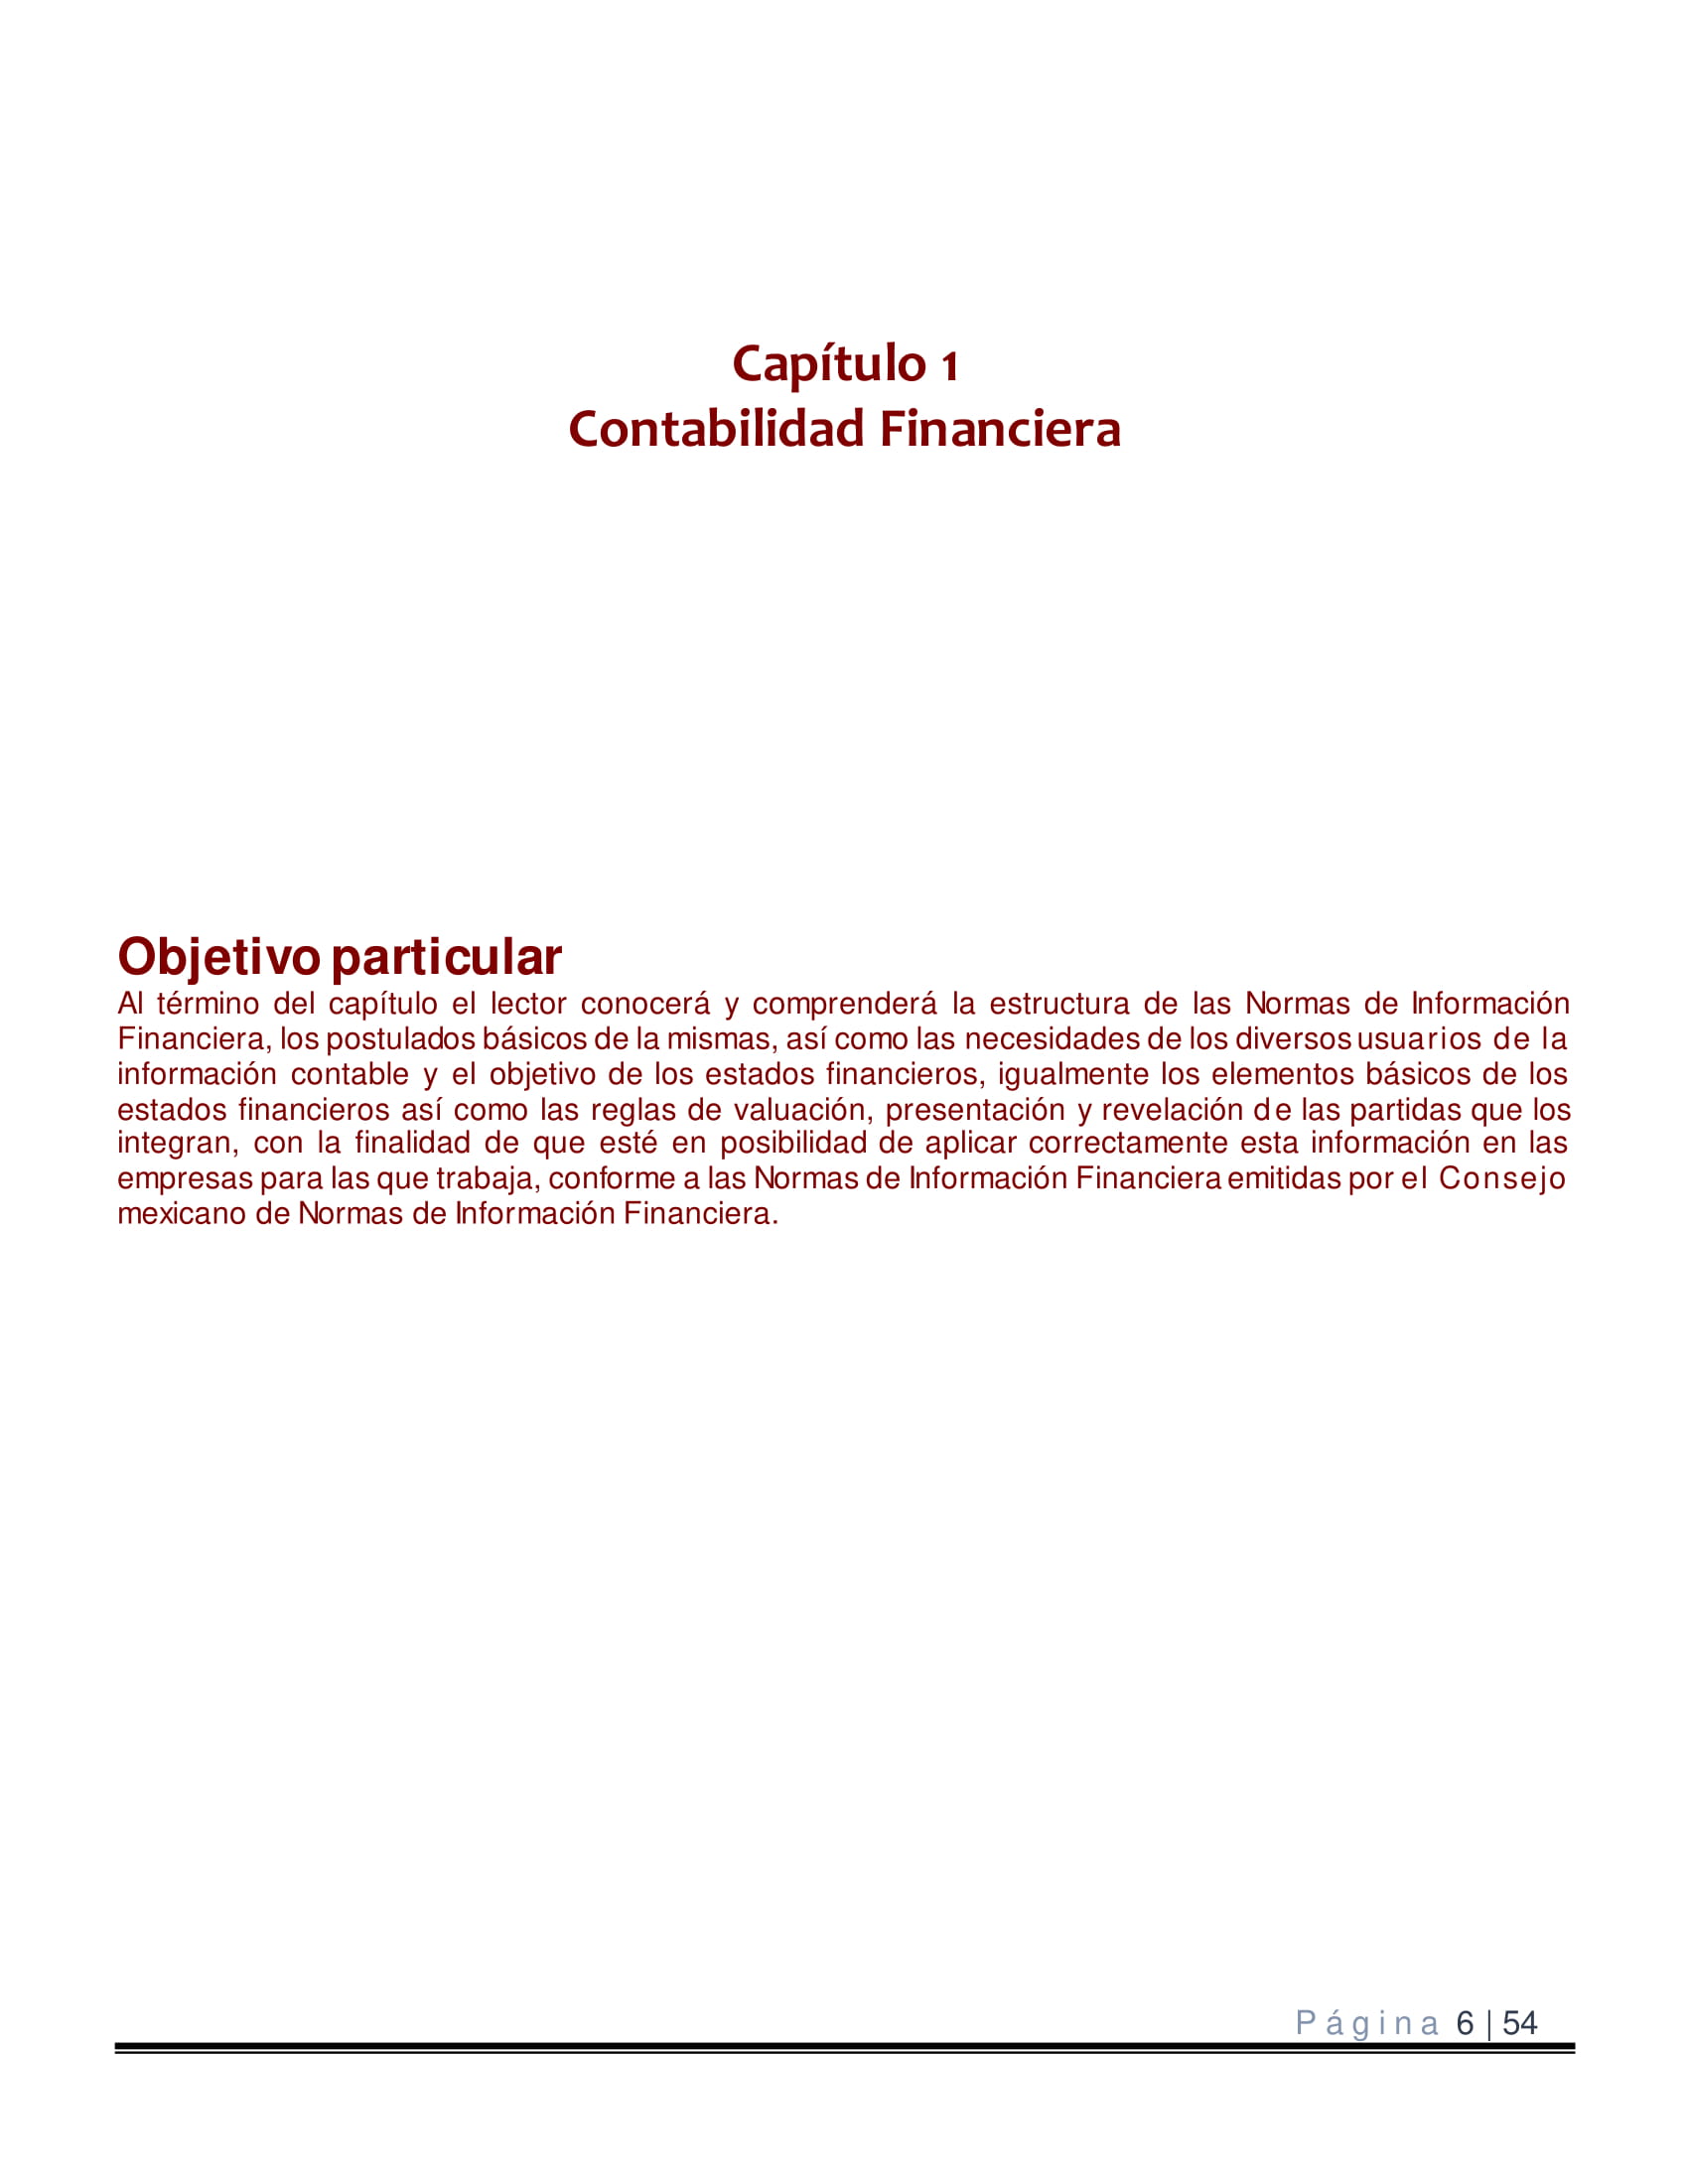 Libro_Consulta_CEFI_2018-06